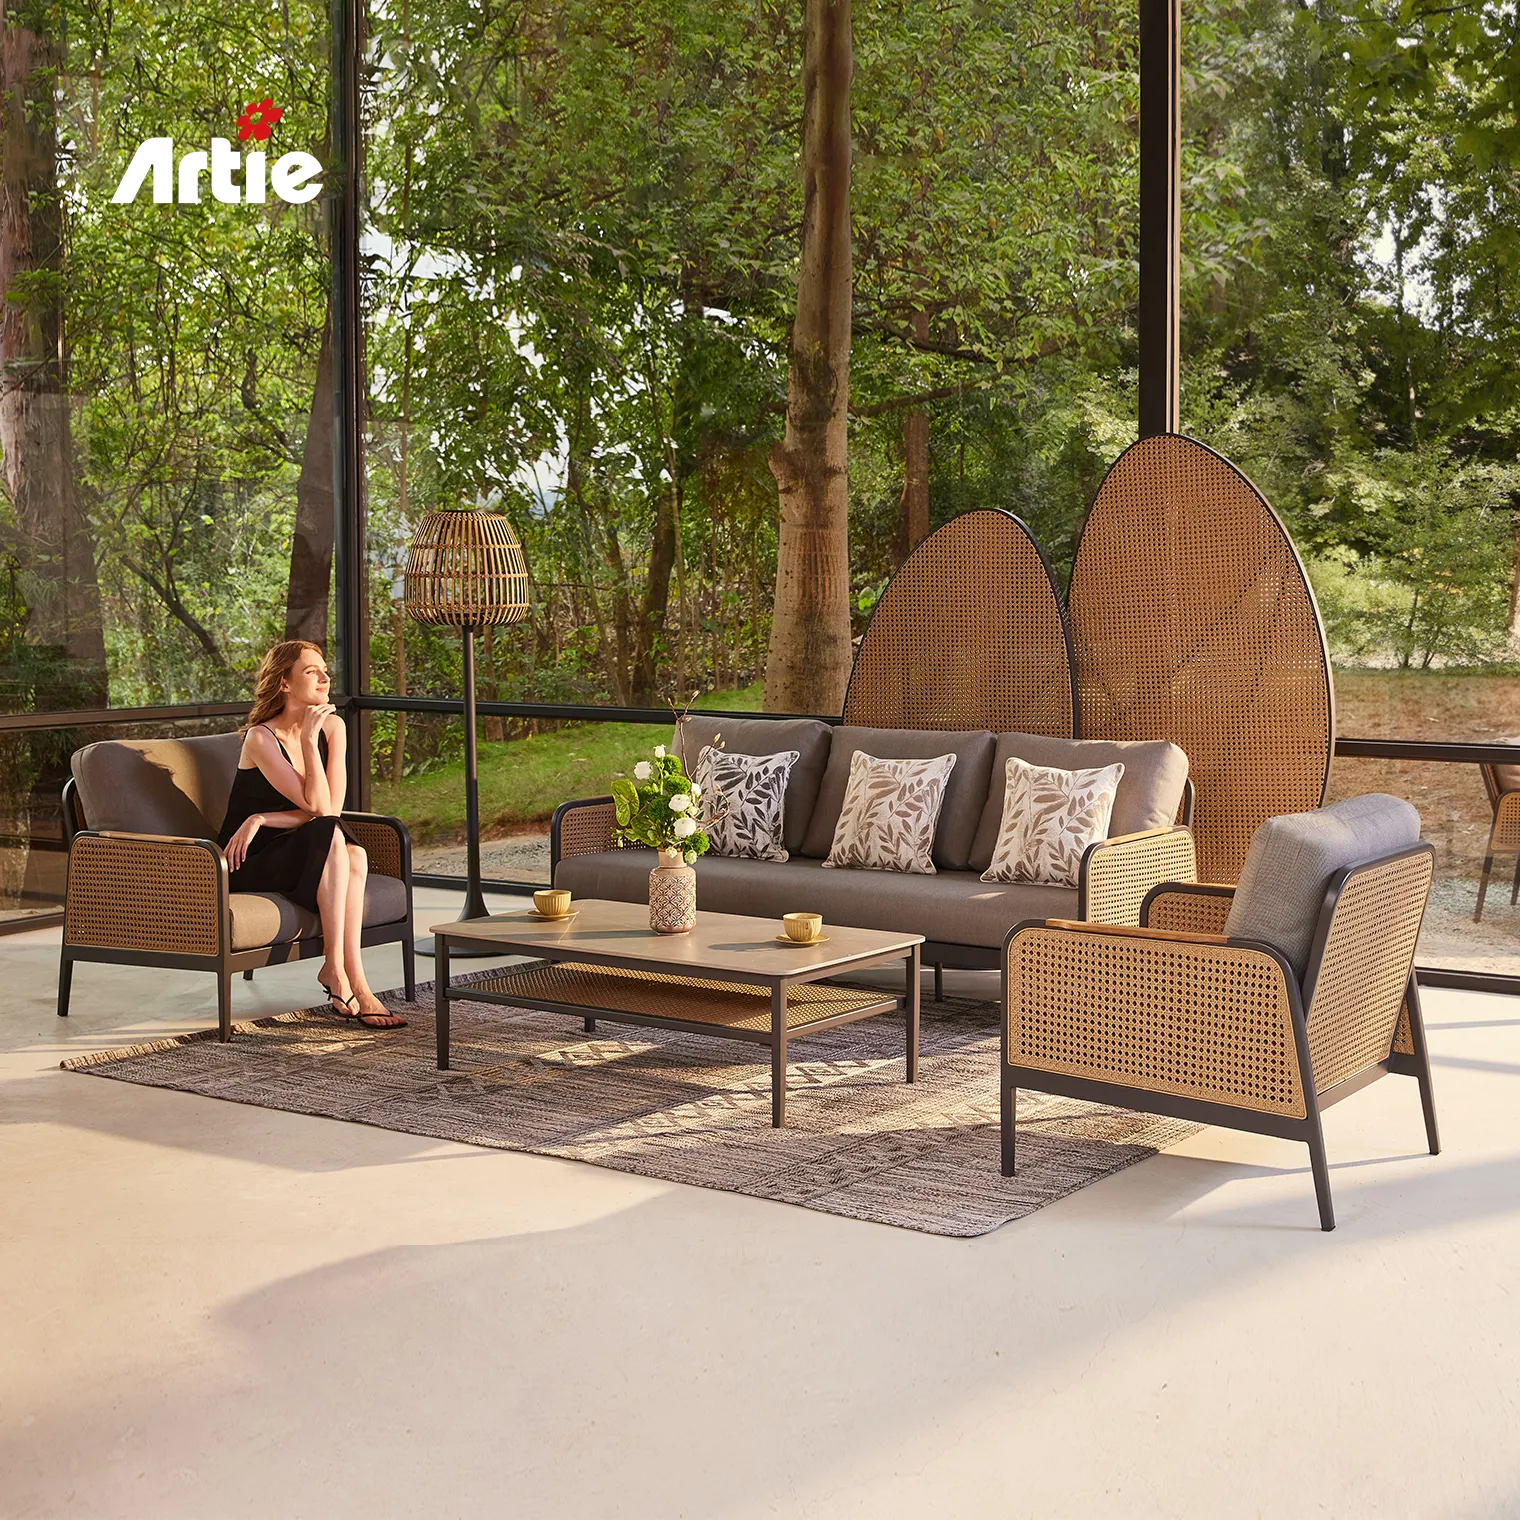 Artie'nin High-end Rattan otel mobilya açık salon seti bahçe kanepe ahşap bahçe mobilyaları açık kanepe Set mobilya